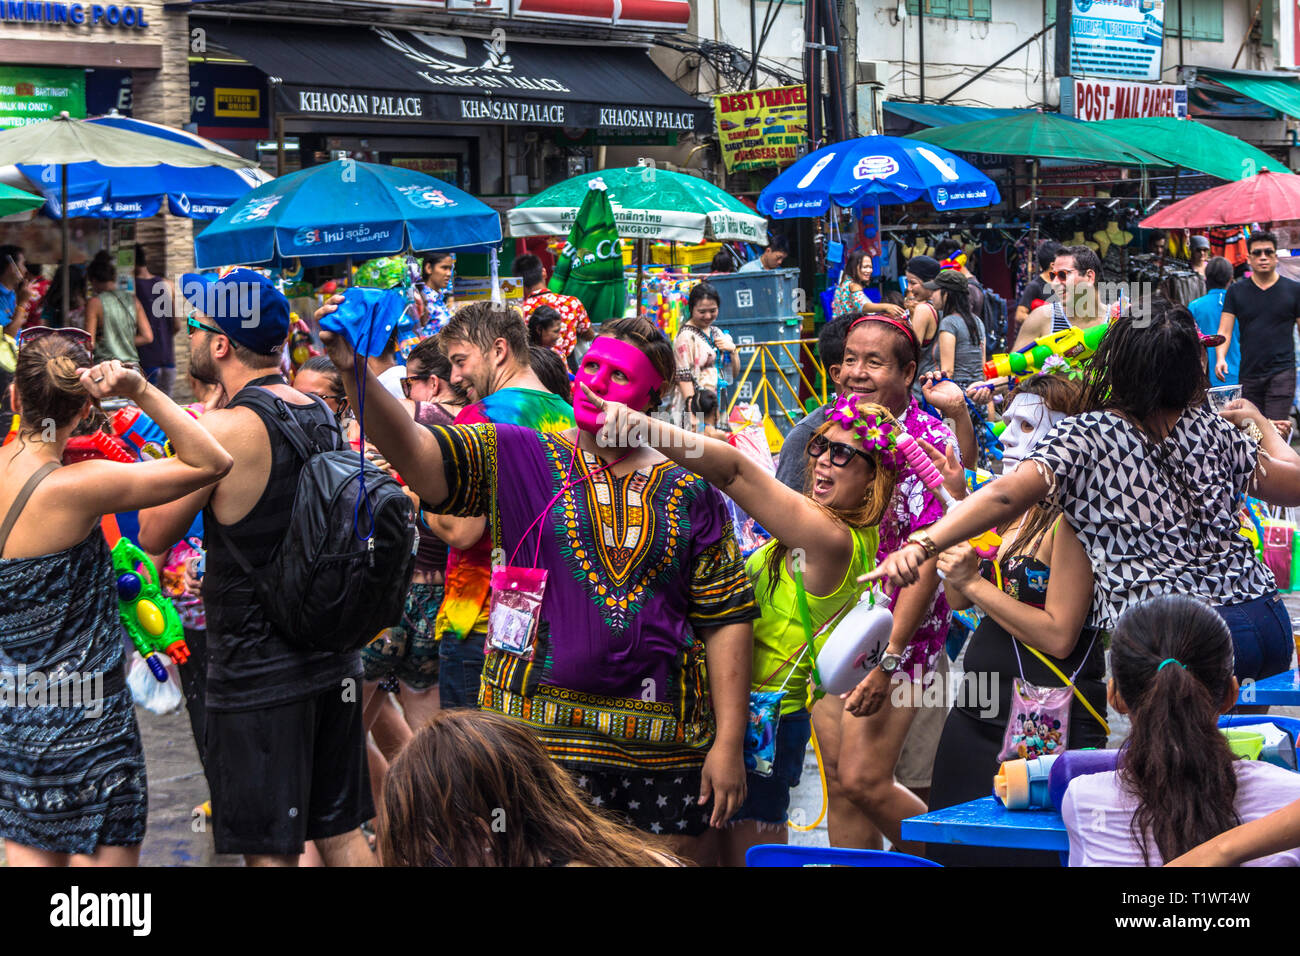 Les gens célébrant le nouvel an Thaï de Songkran à Khaosan Road, Bangkok Thaïlande Banque D'Images